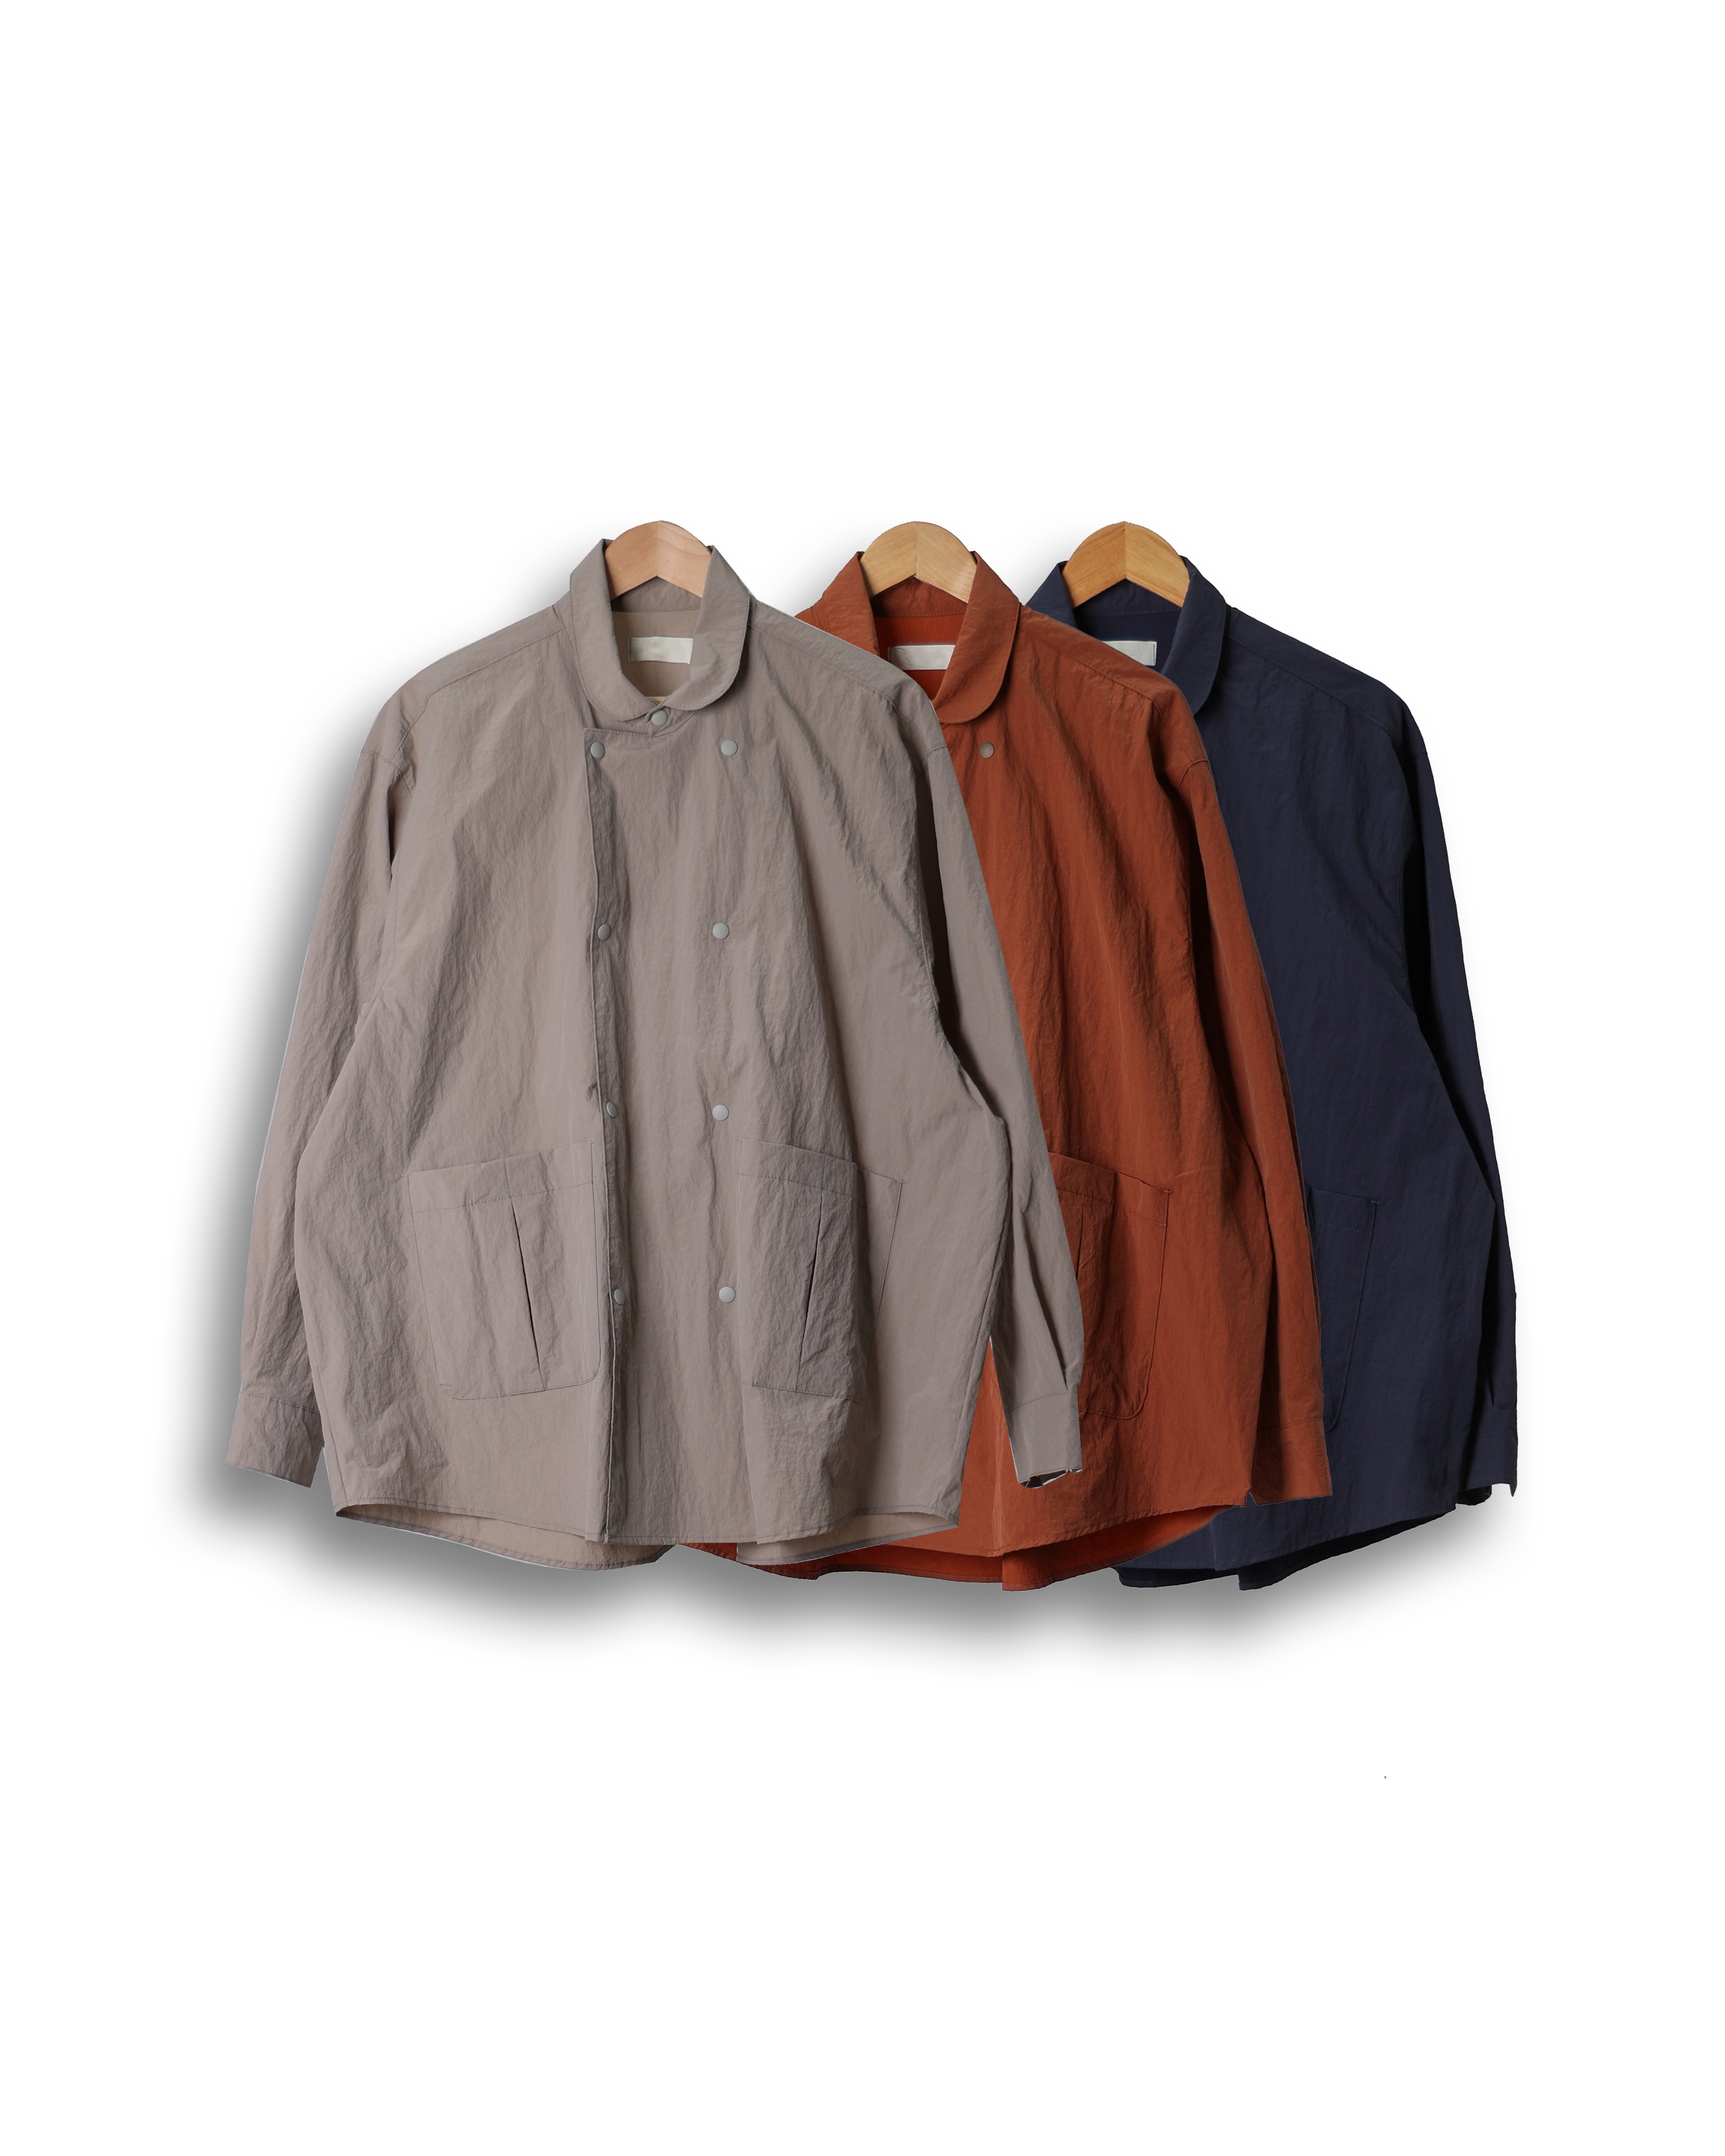 LIBERT Shawl Collar Double Shirts Jacket (Navy/Brick/Beige)